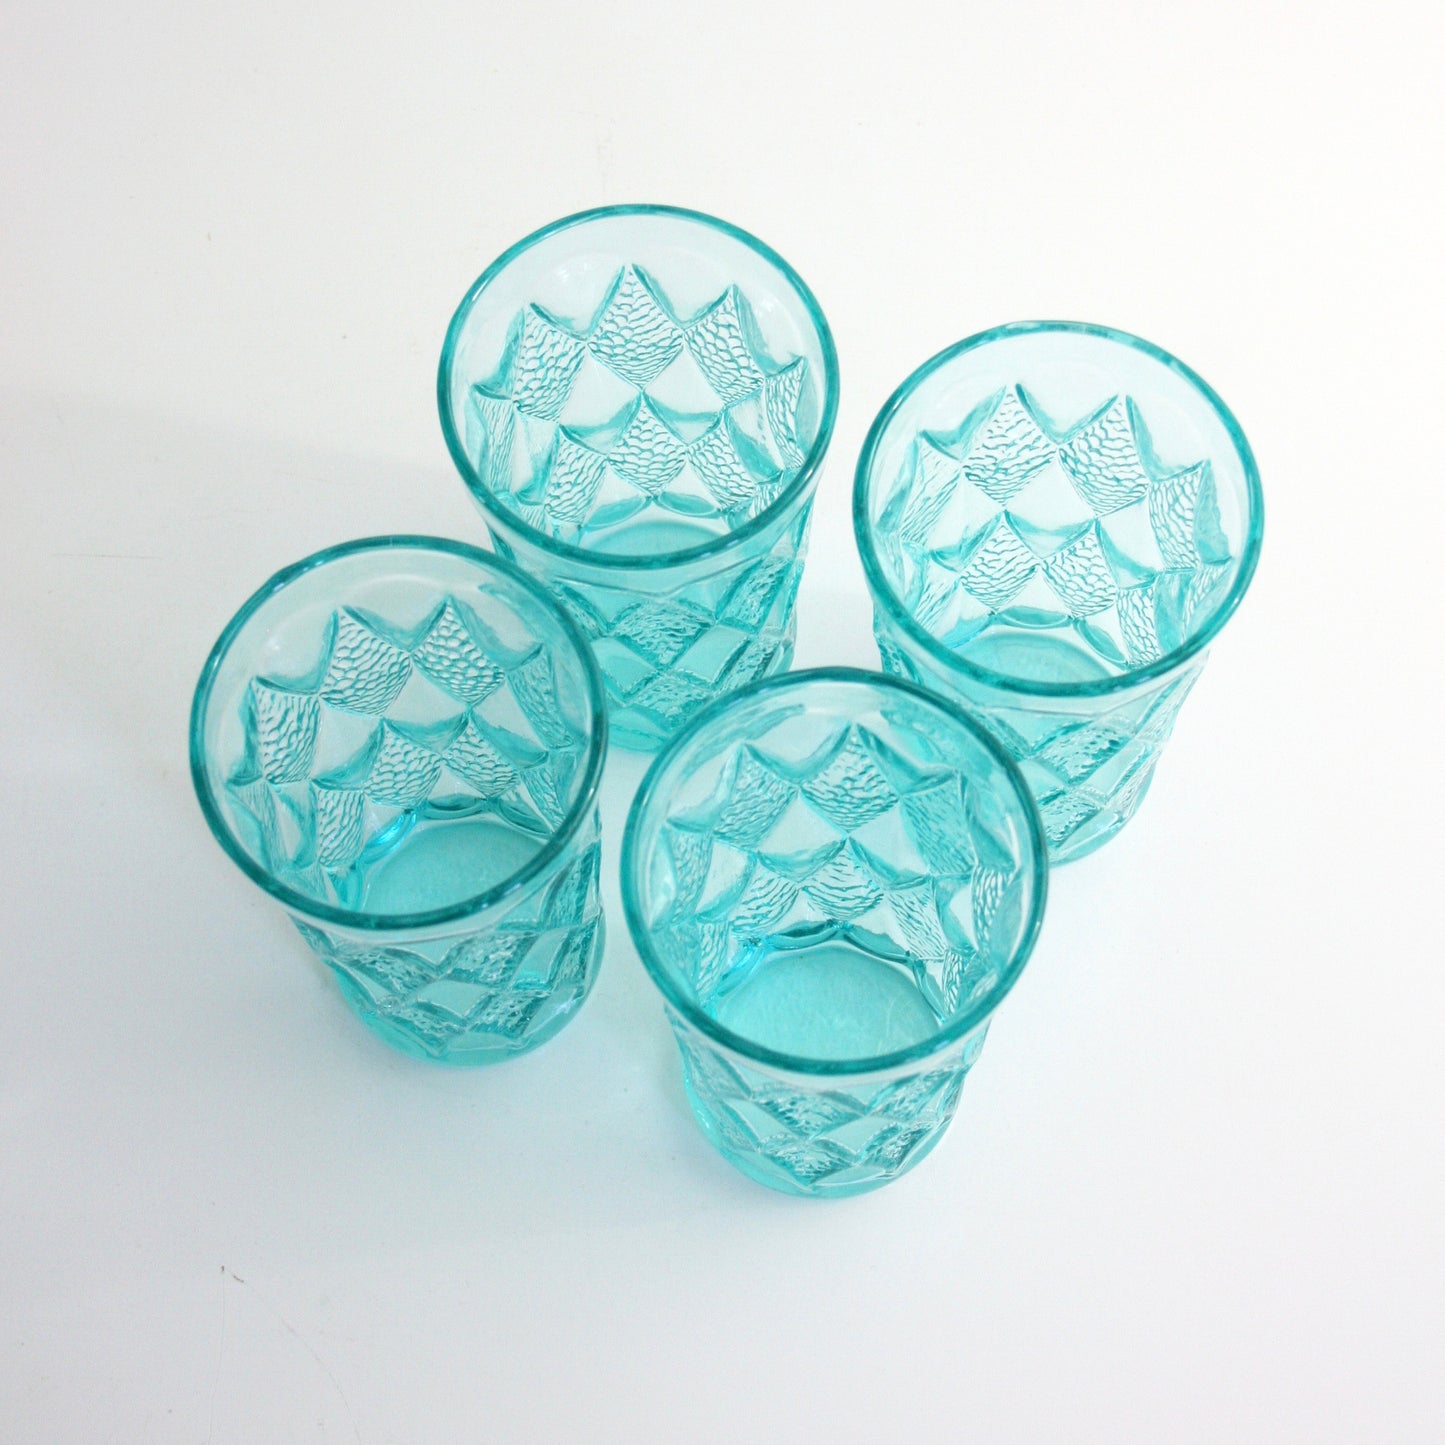 SOLD - Mid Century Modern Aquamarine Gemstone Kimberly Glasses by Anchor Hocking